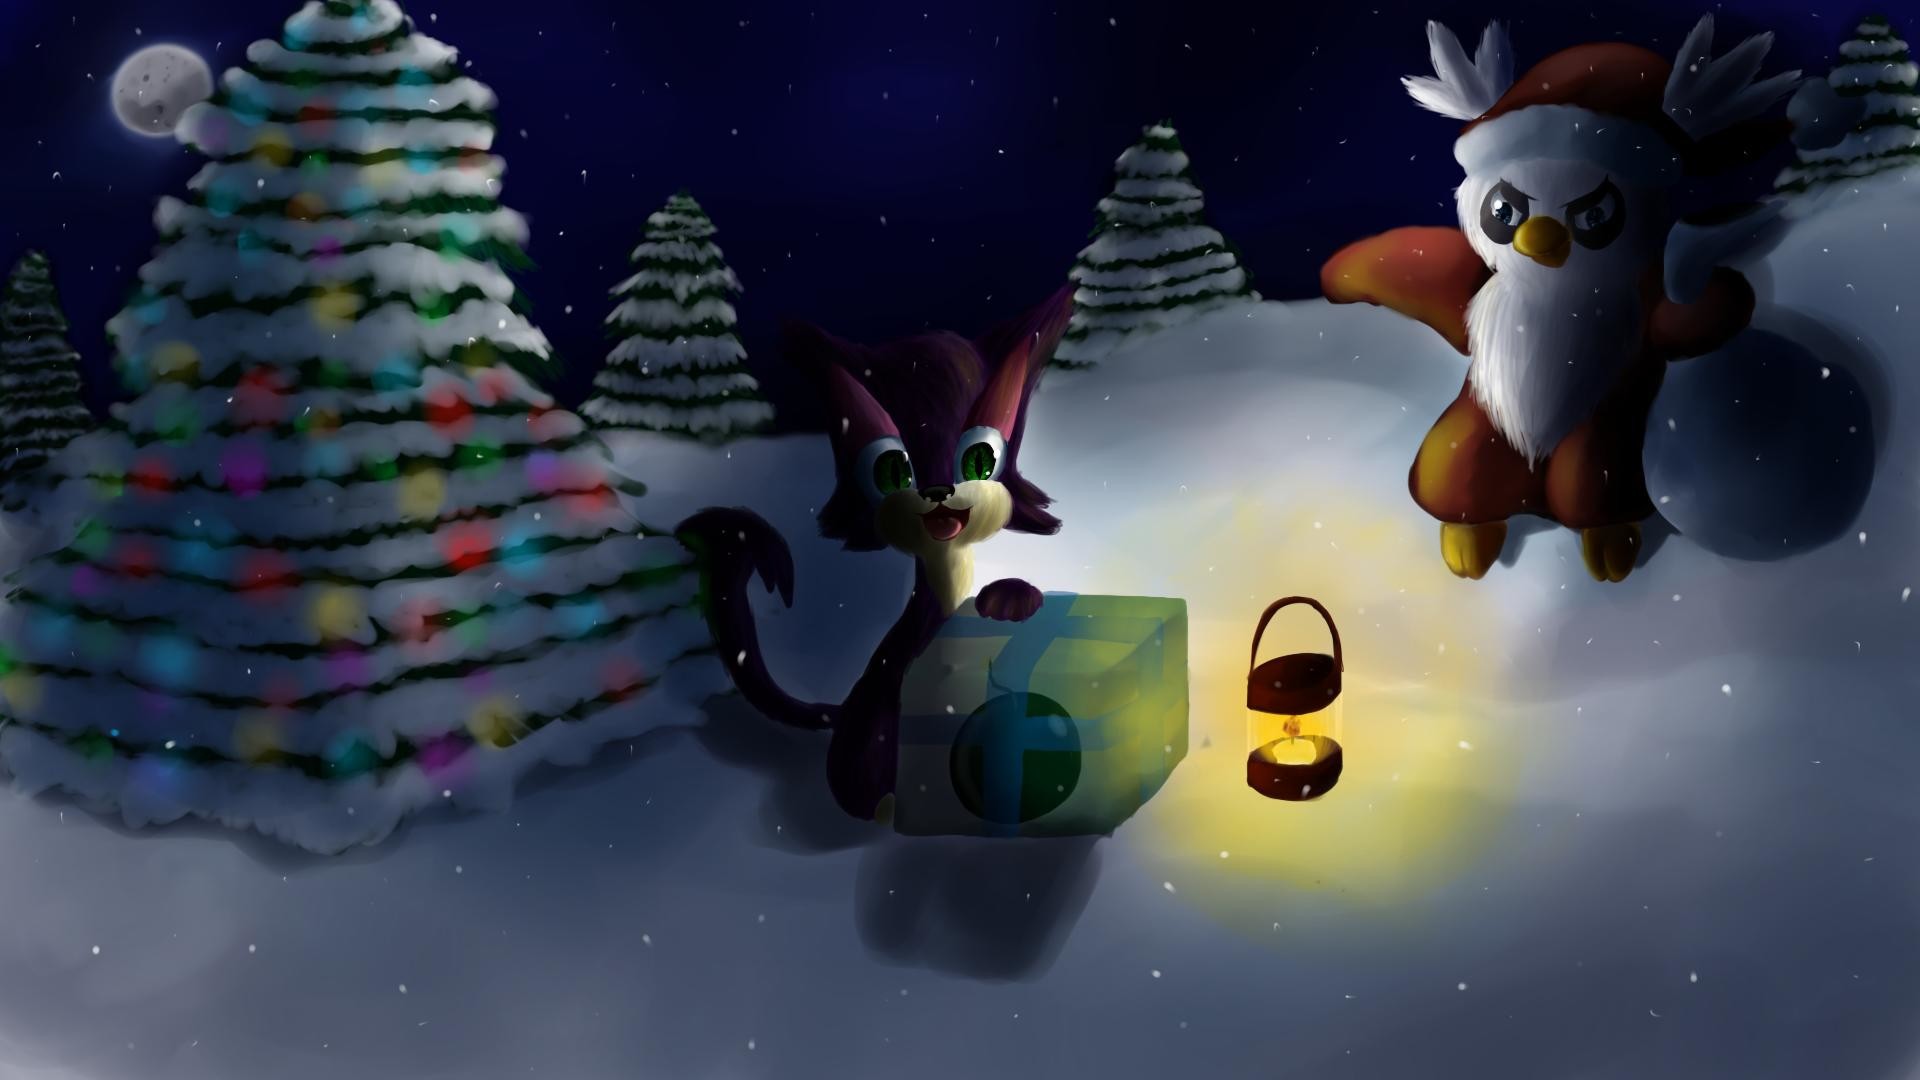 1920x1080 Bad Santa ~Christmas Pokemon Wallpaper~ by Chicorii on DeviantArt